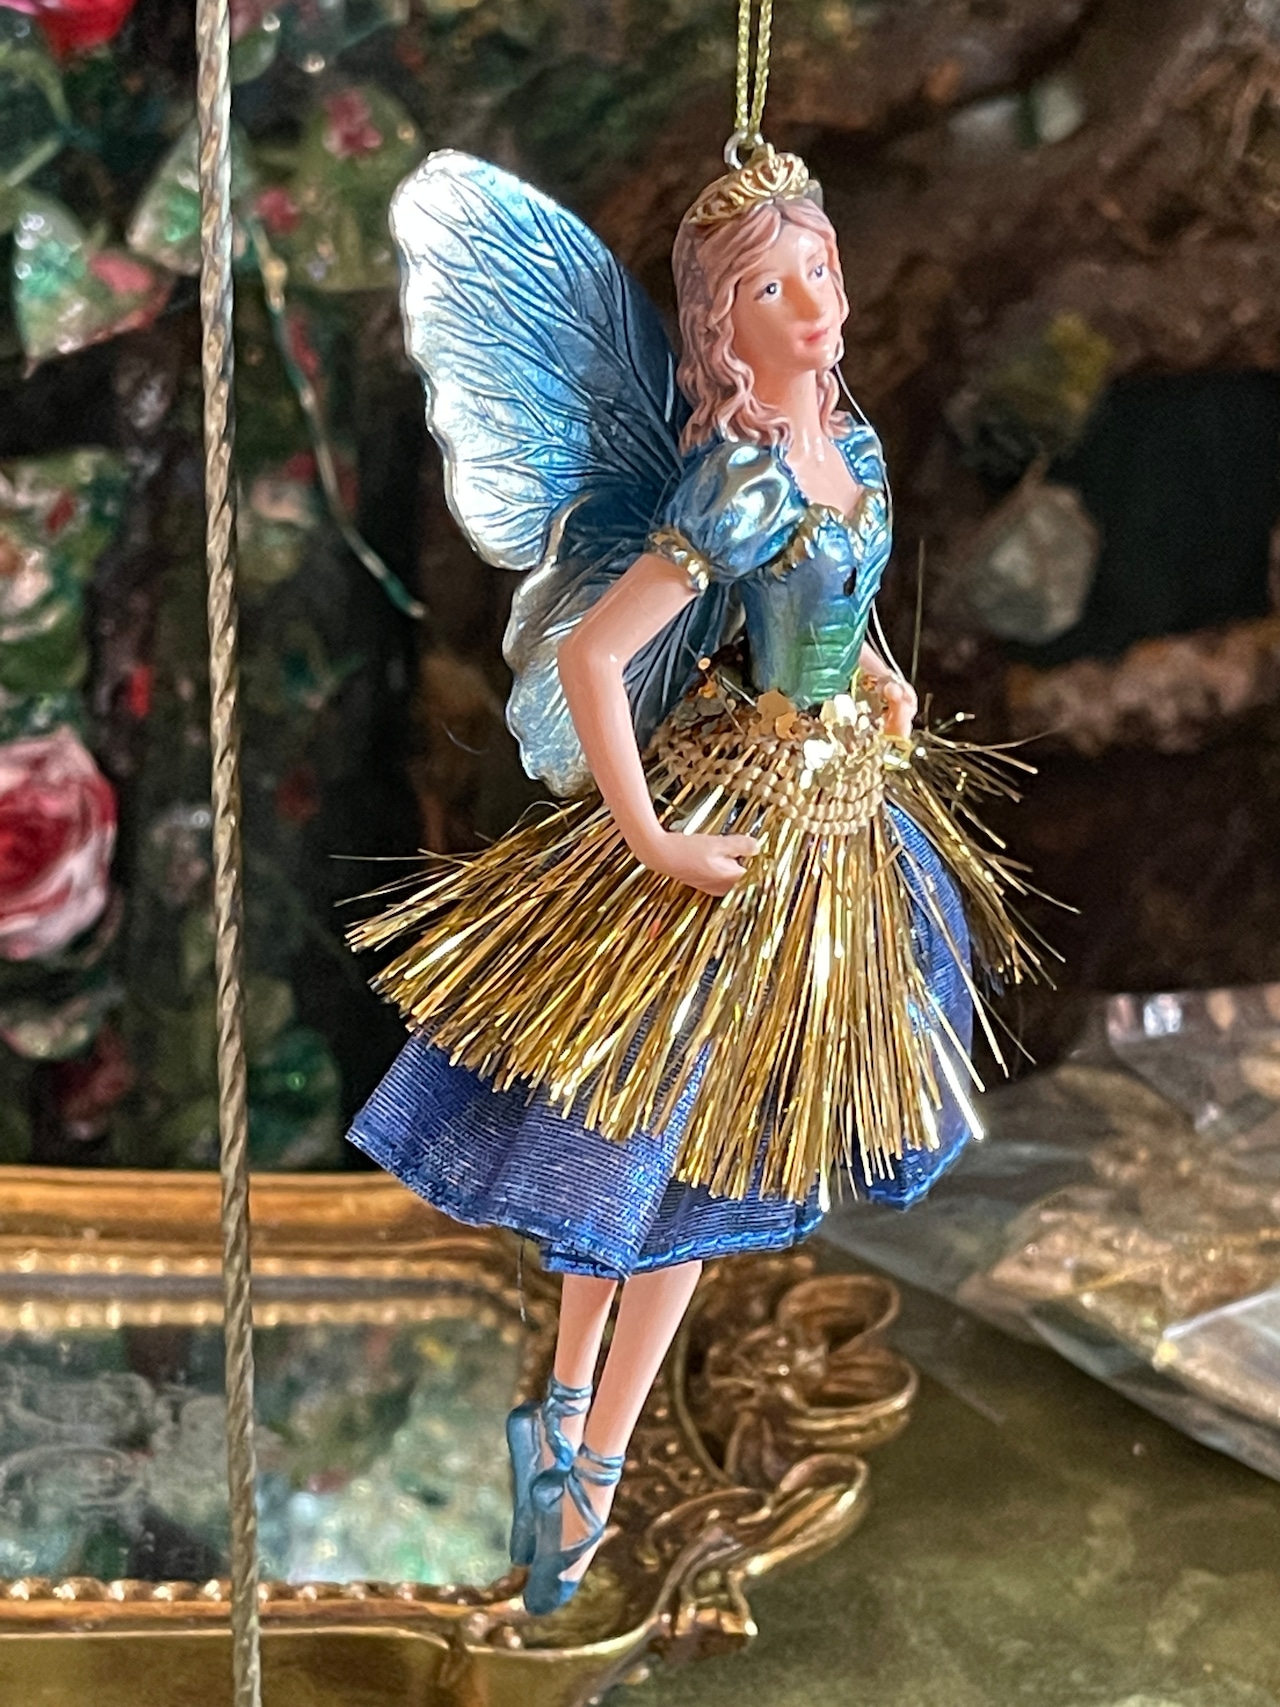 『GISELA GRAHAM』アトランティス フェアリー 妖精 オーナメント  イギリス製  Atlantis fairyの画像09